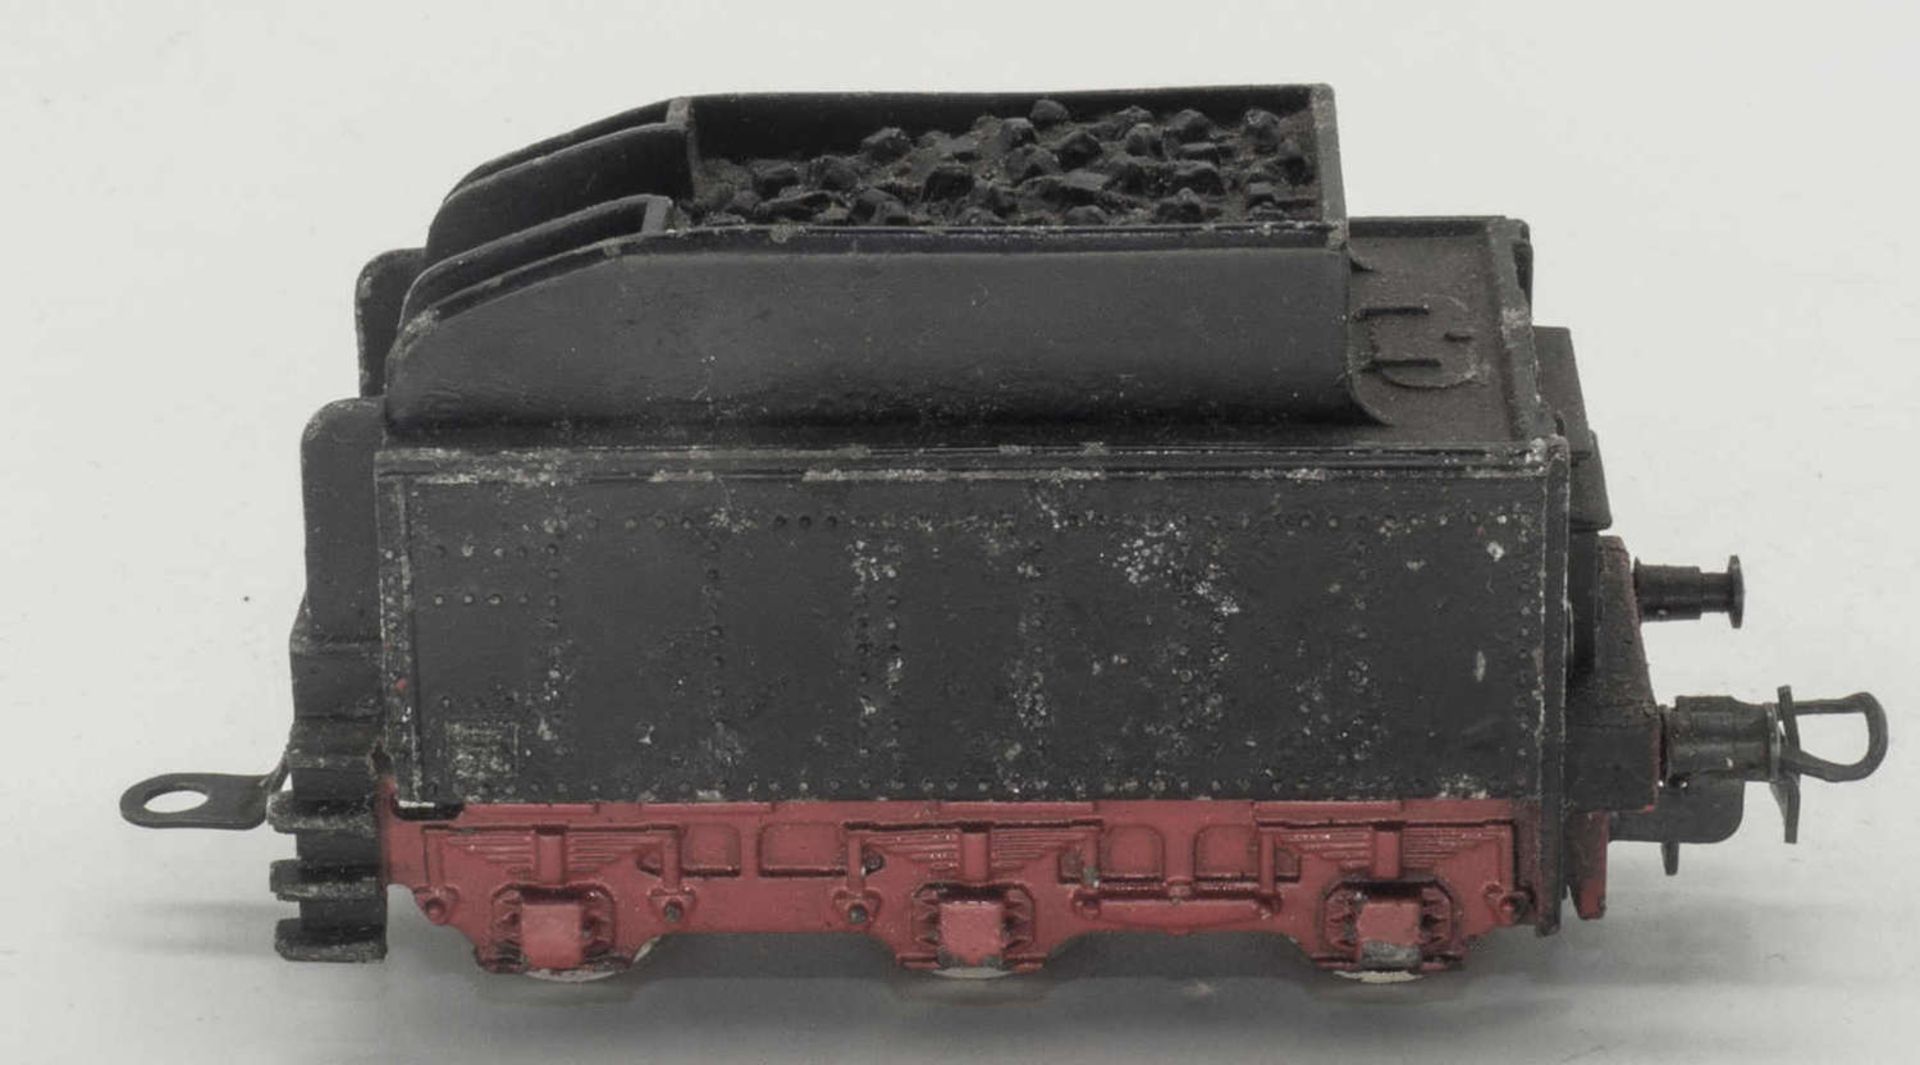 Märklin RM 800, Dampflokomotive mit Schlepptender, Guss, Spur H0, gebraucht.Märklin RM 800, steam - Image 6 of 8